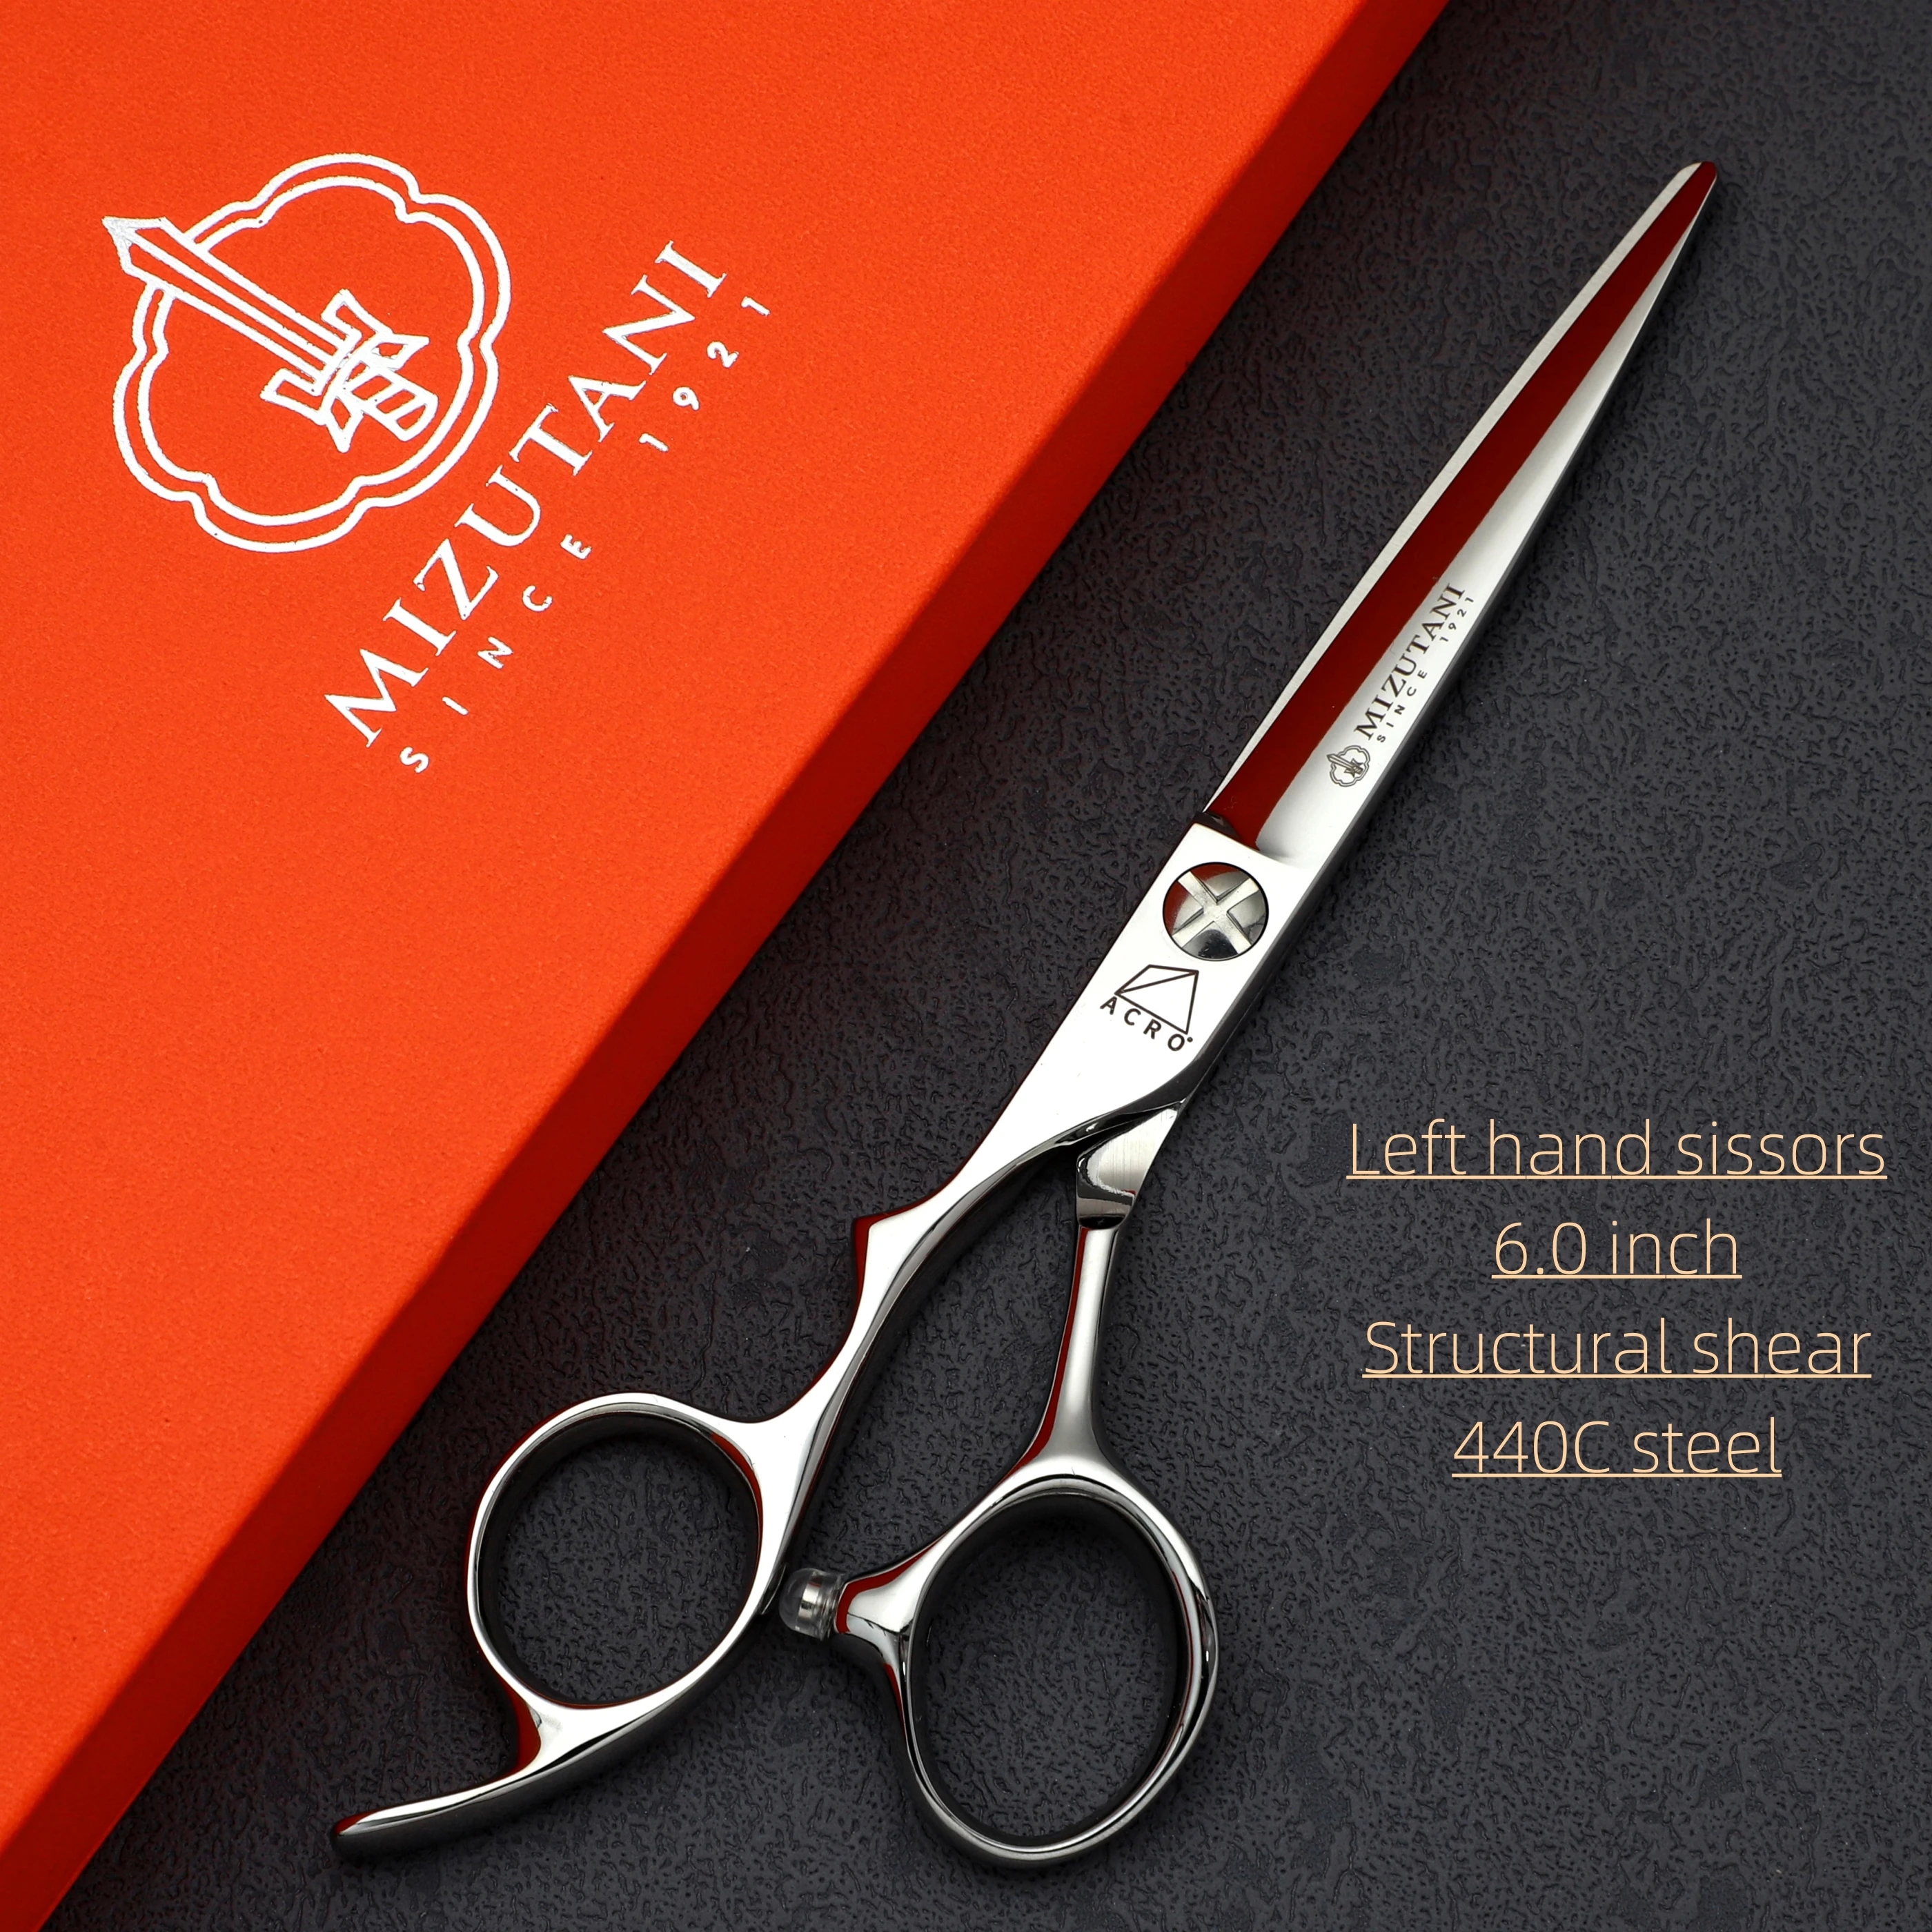 

MIZUTANI Left hand sissors professional barber scissors Barbershop hair cutting tools 440C steel set of 6.0-6.5-6.8 inch